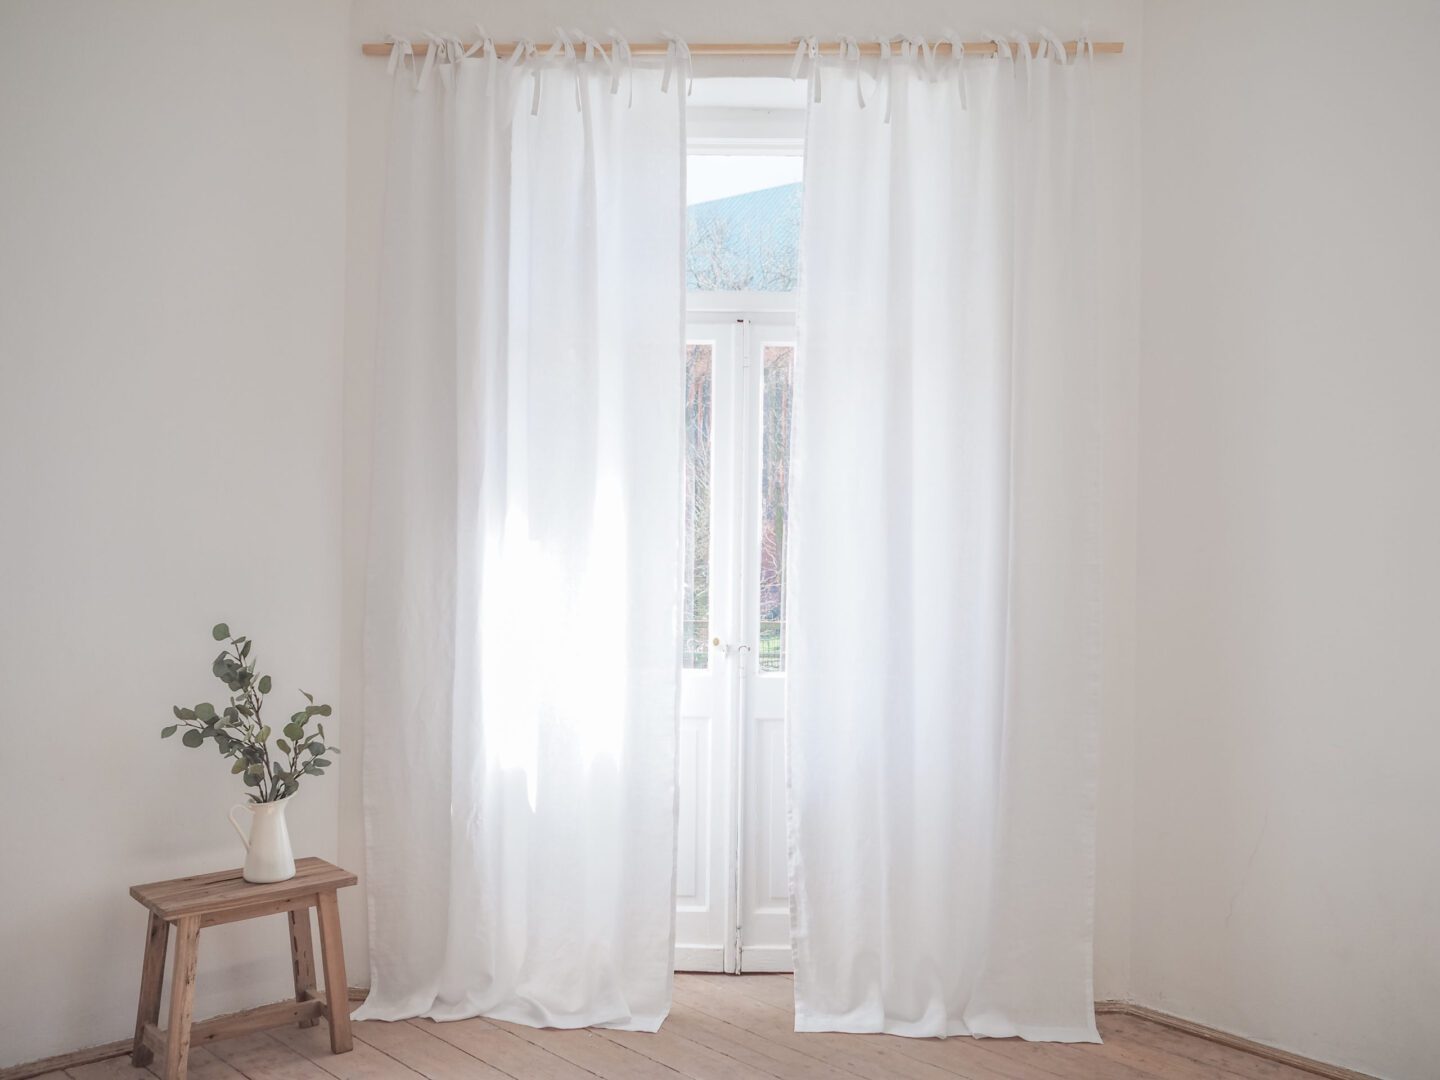 White tie top linen curtains